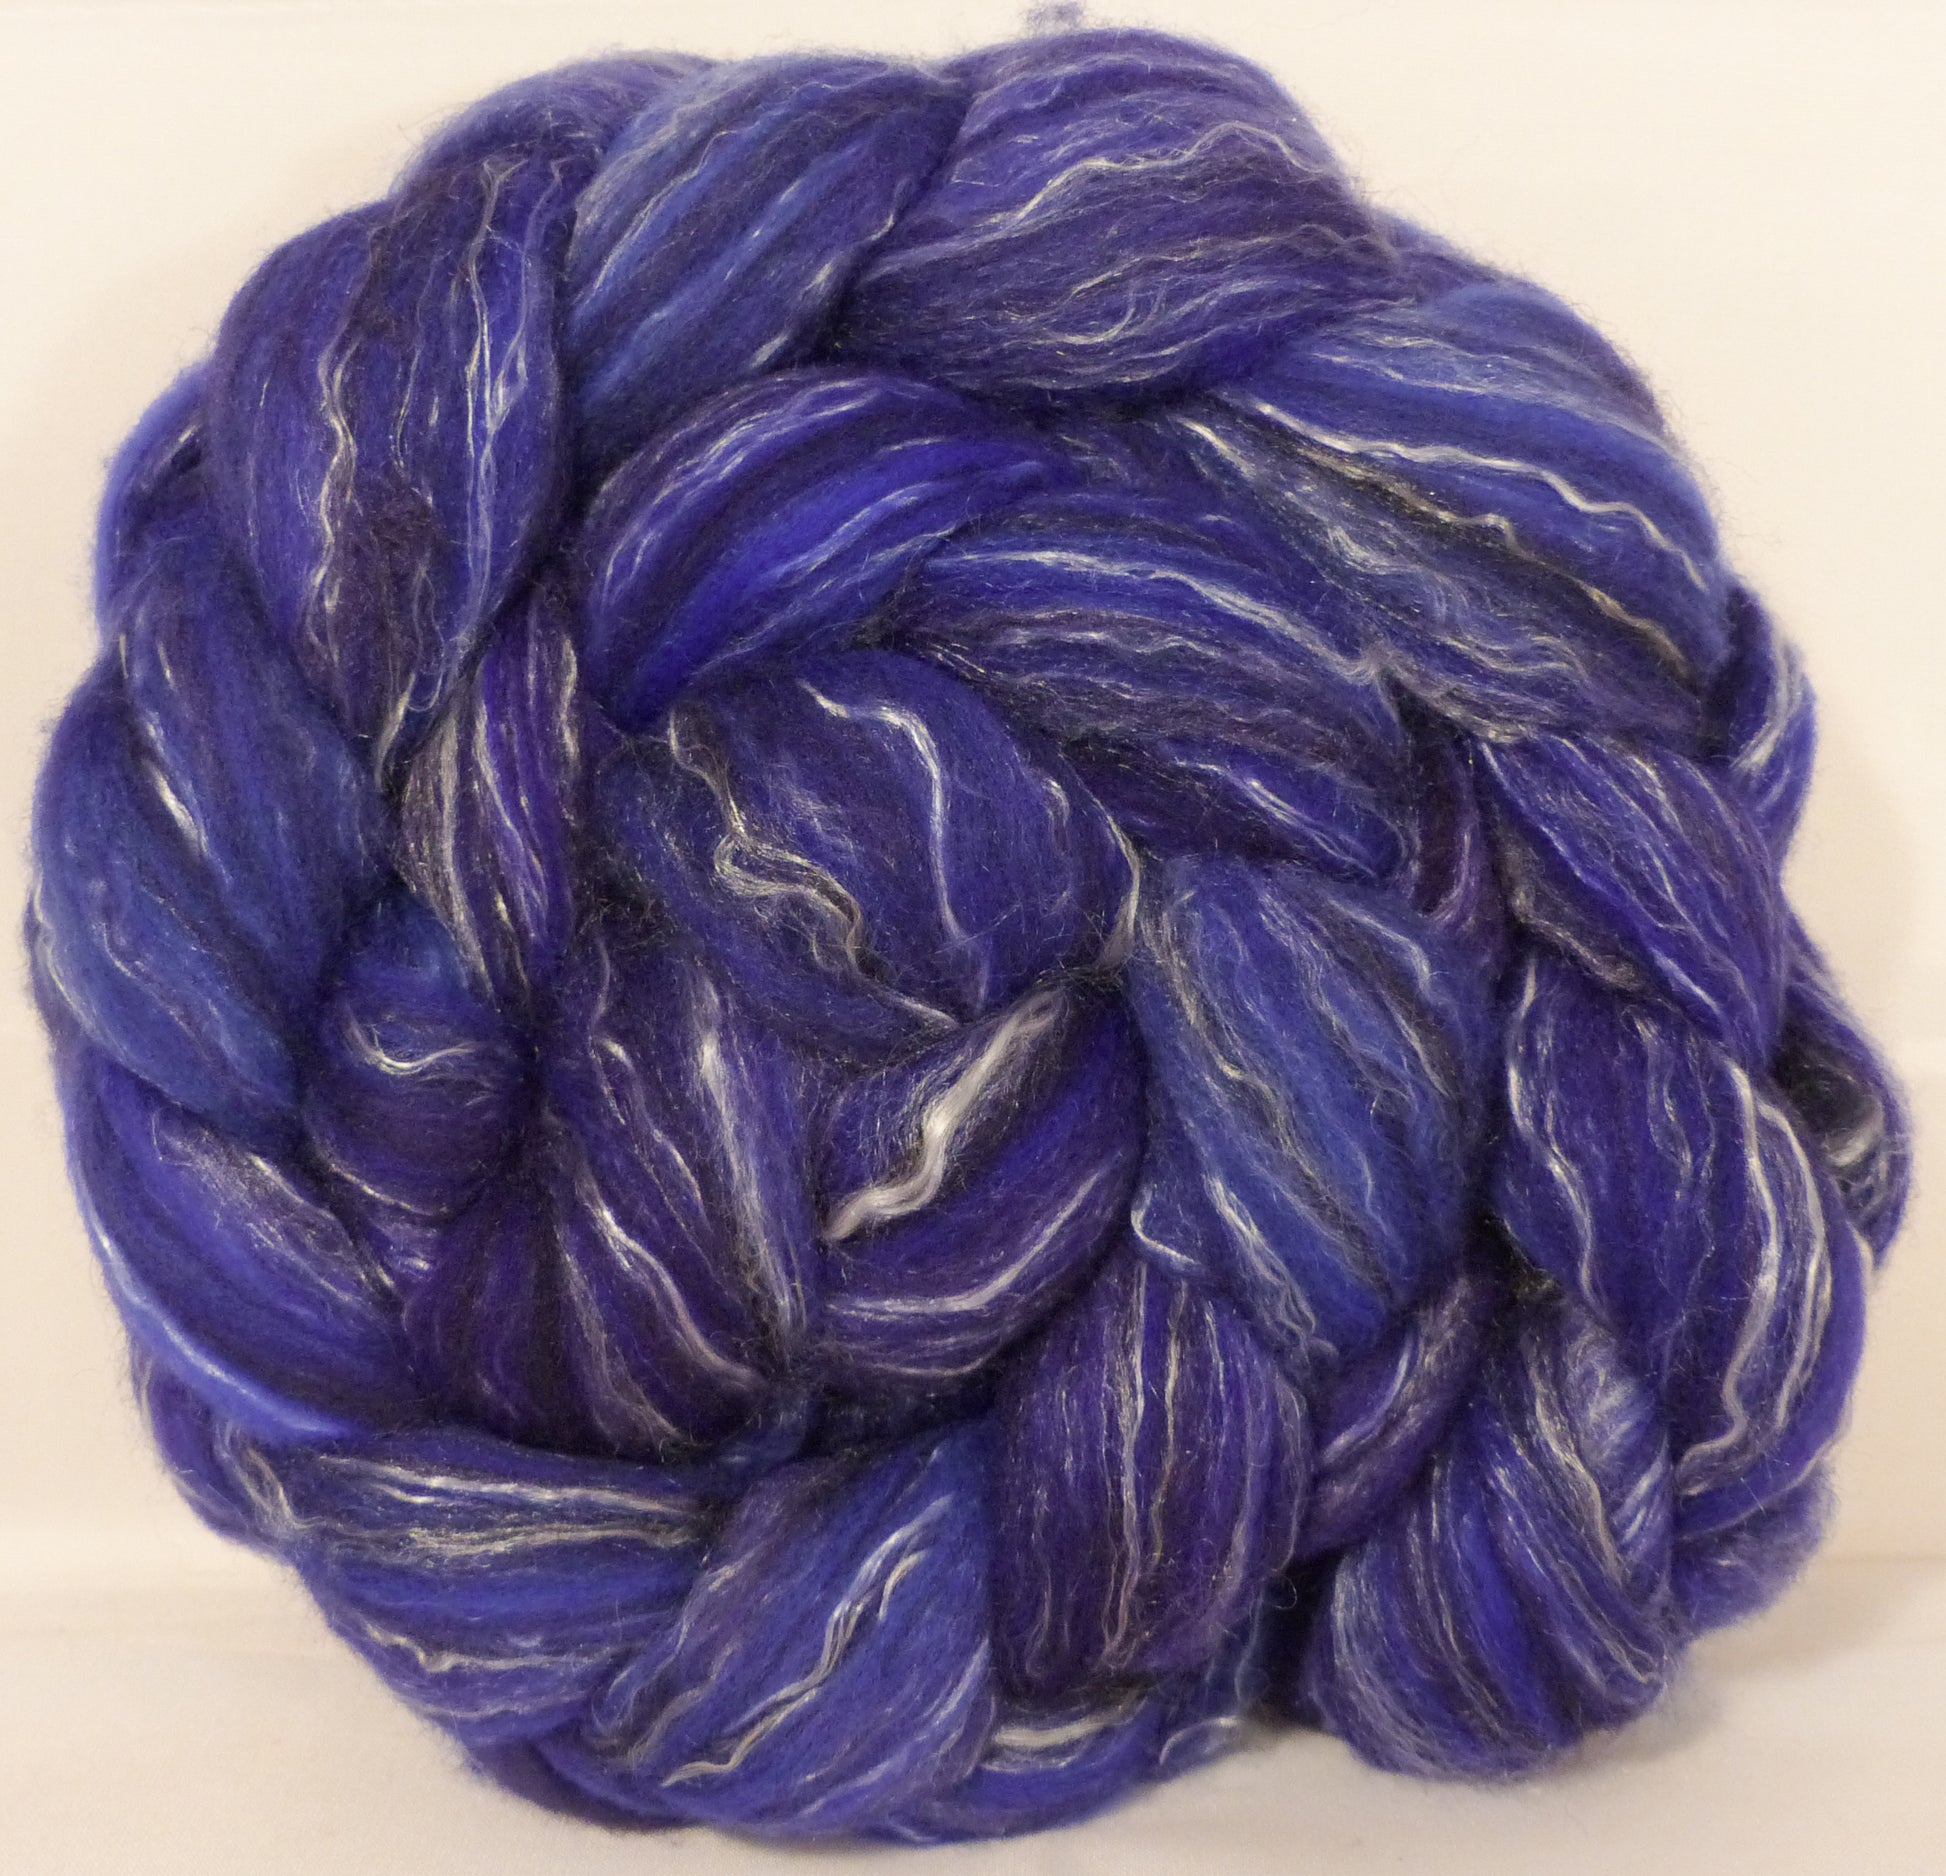 Batt in a Braid #2 - Primrose Purple -(5.1 oz.)Polwarth/ Manx / Black tussah silk/ tencel (40/20/20/20) - Inglenook Fibers